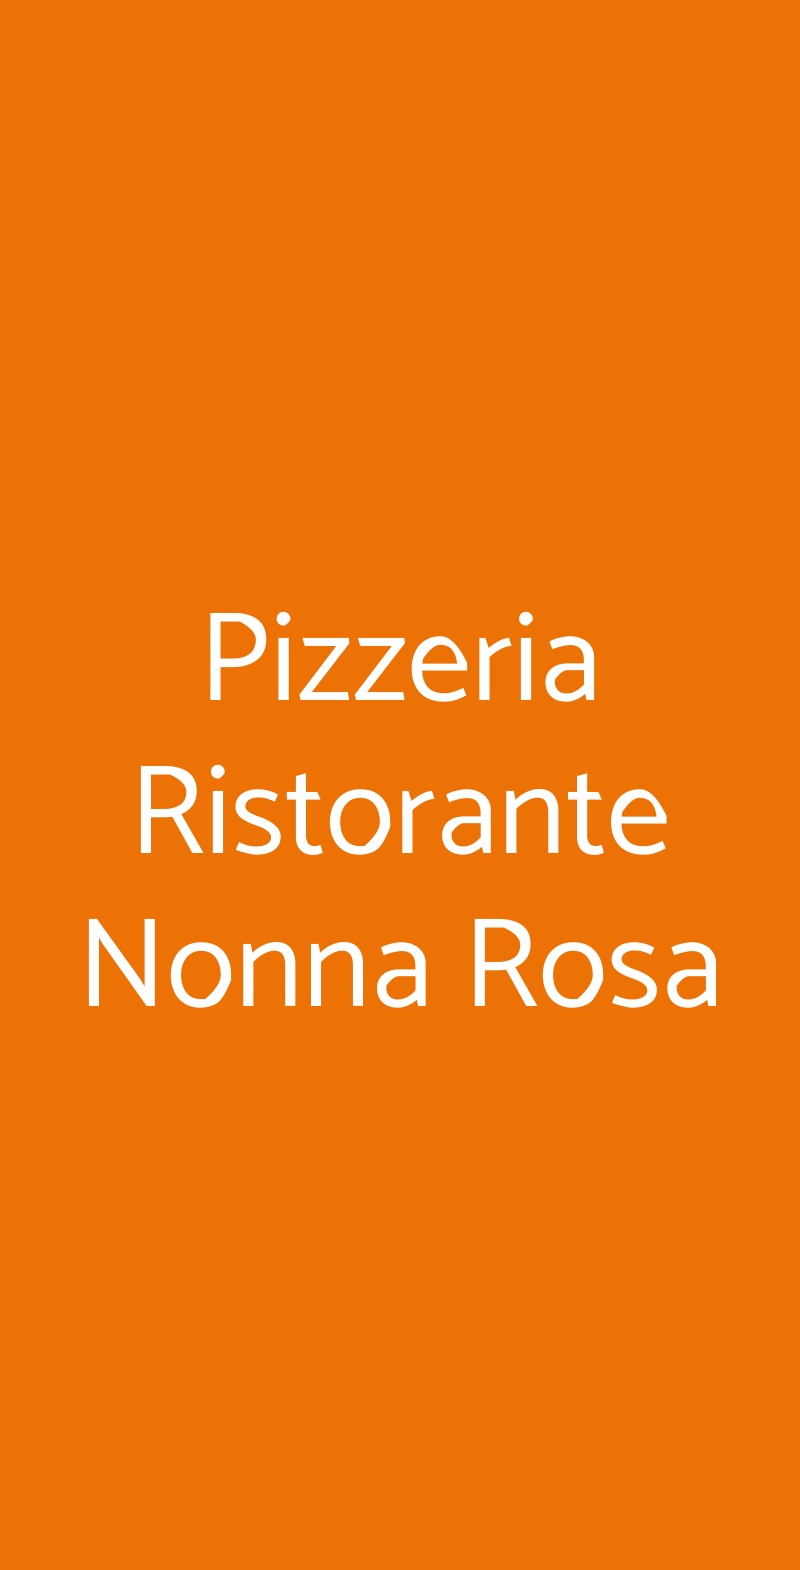 Pizzeria Ristorante Nonna Rosa Trieste menù 1 pagina